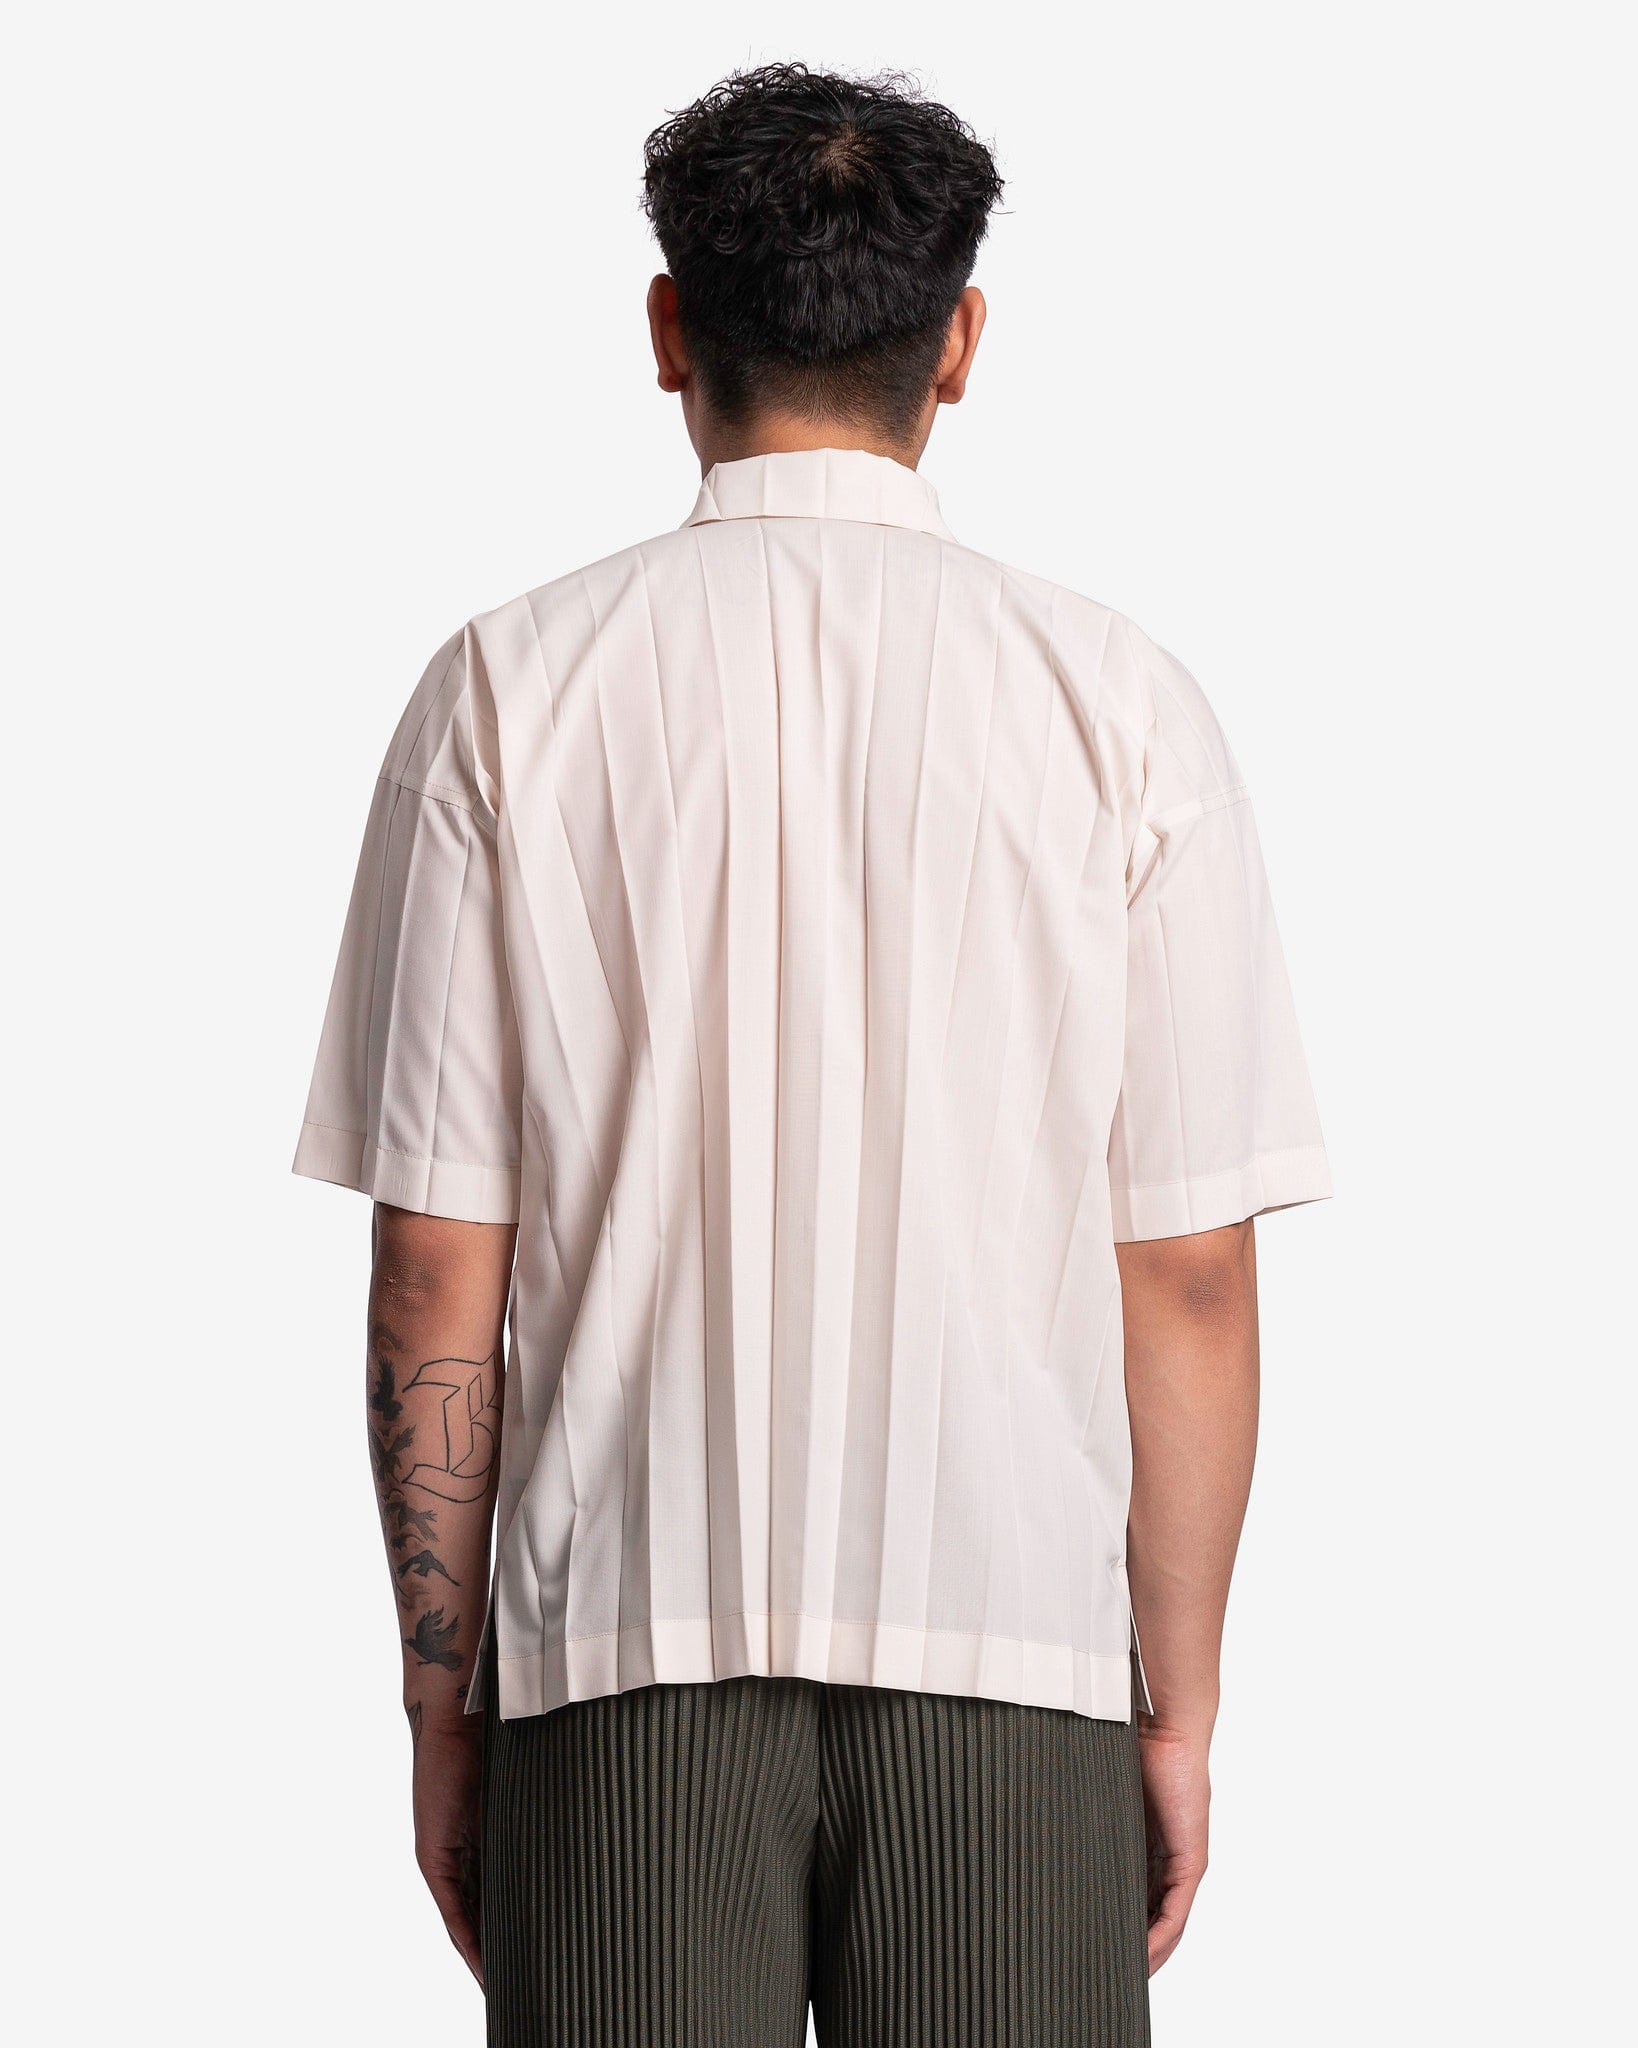 Homme Plissé Issey Miyake Men's Shirts Edge Short Sleeve Shirt in Ivory